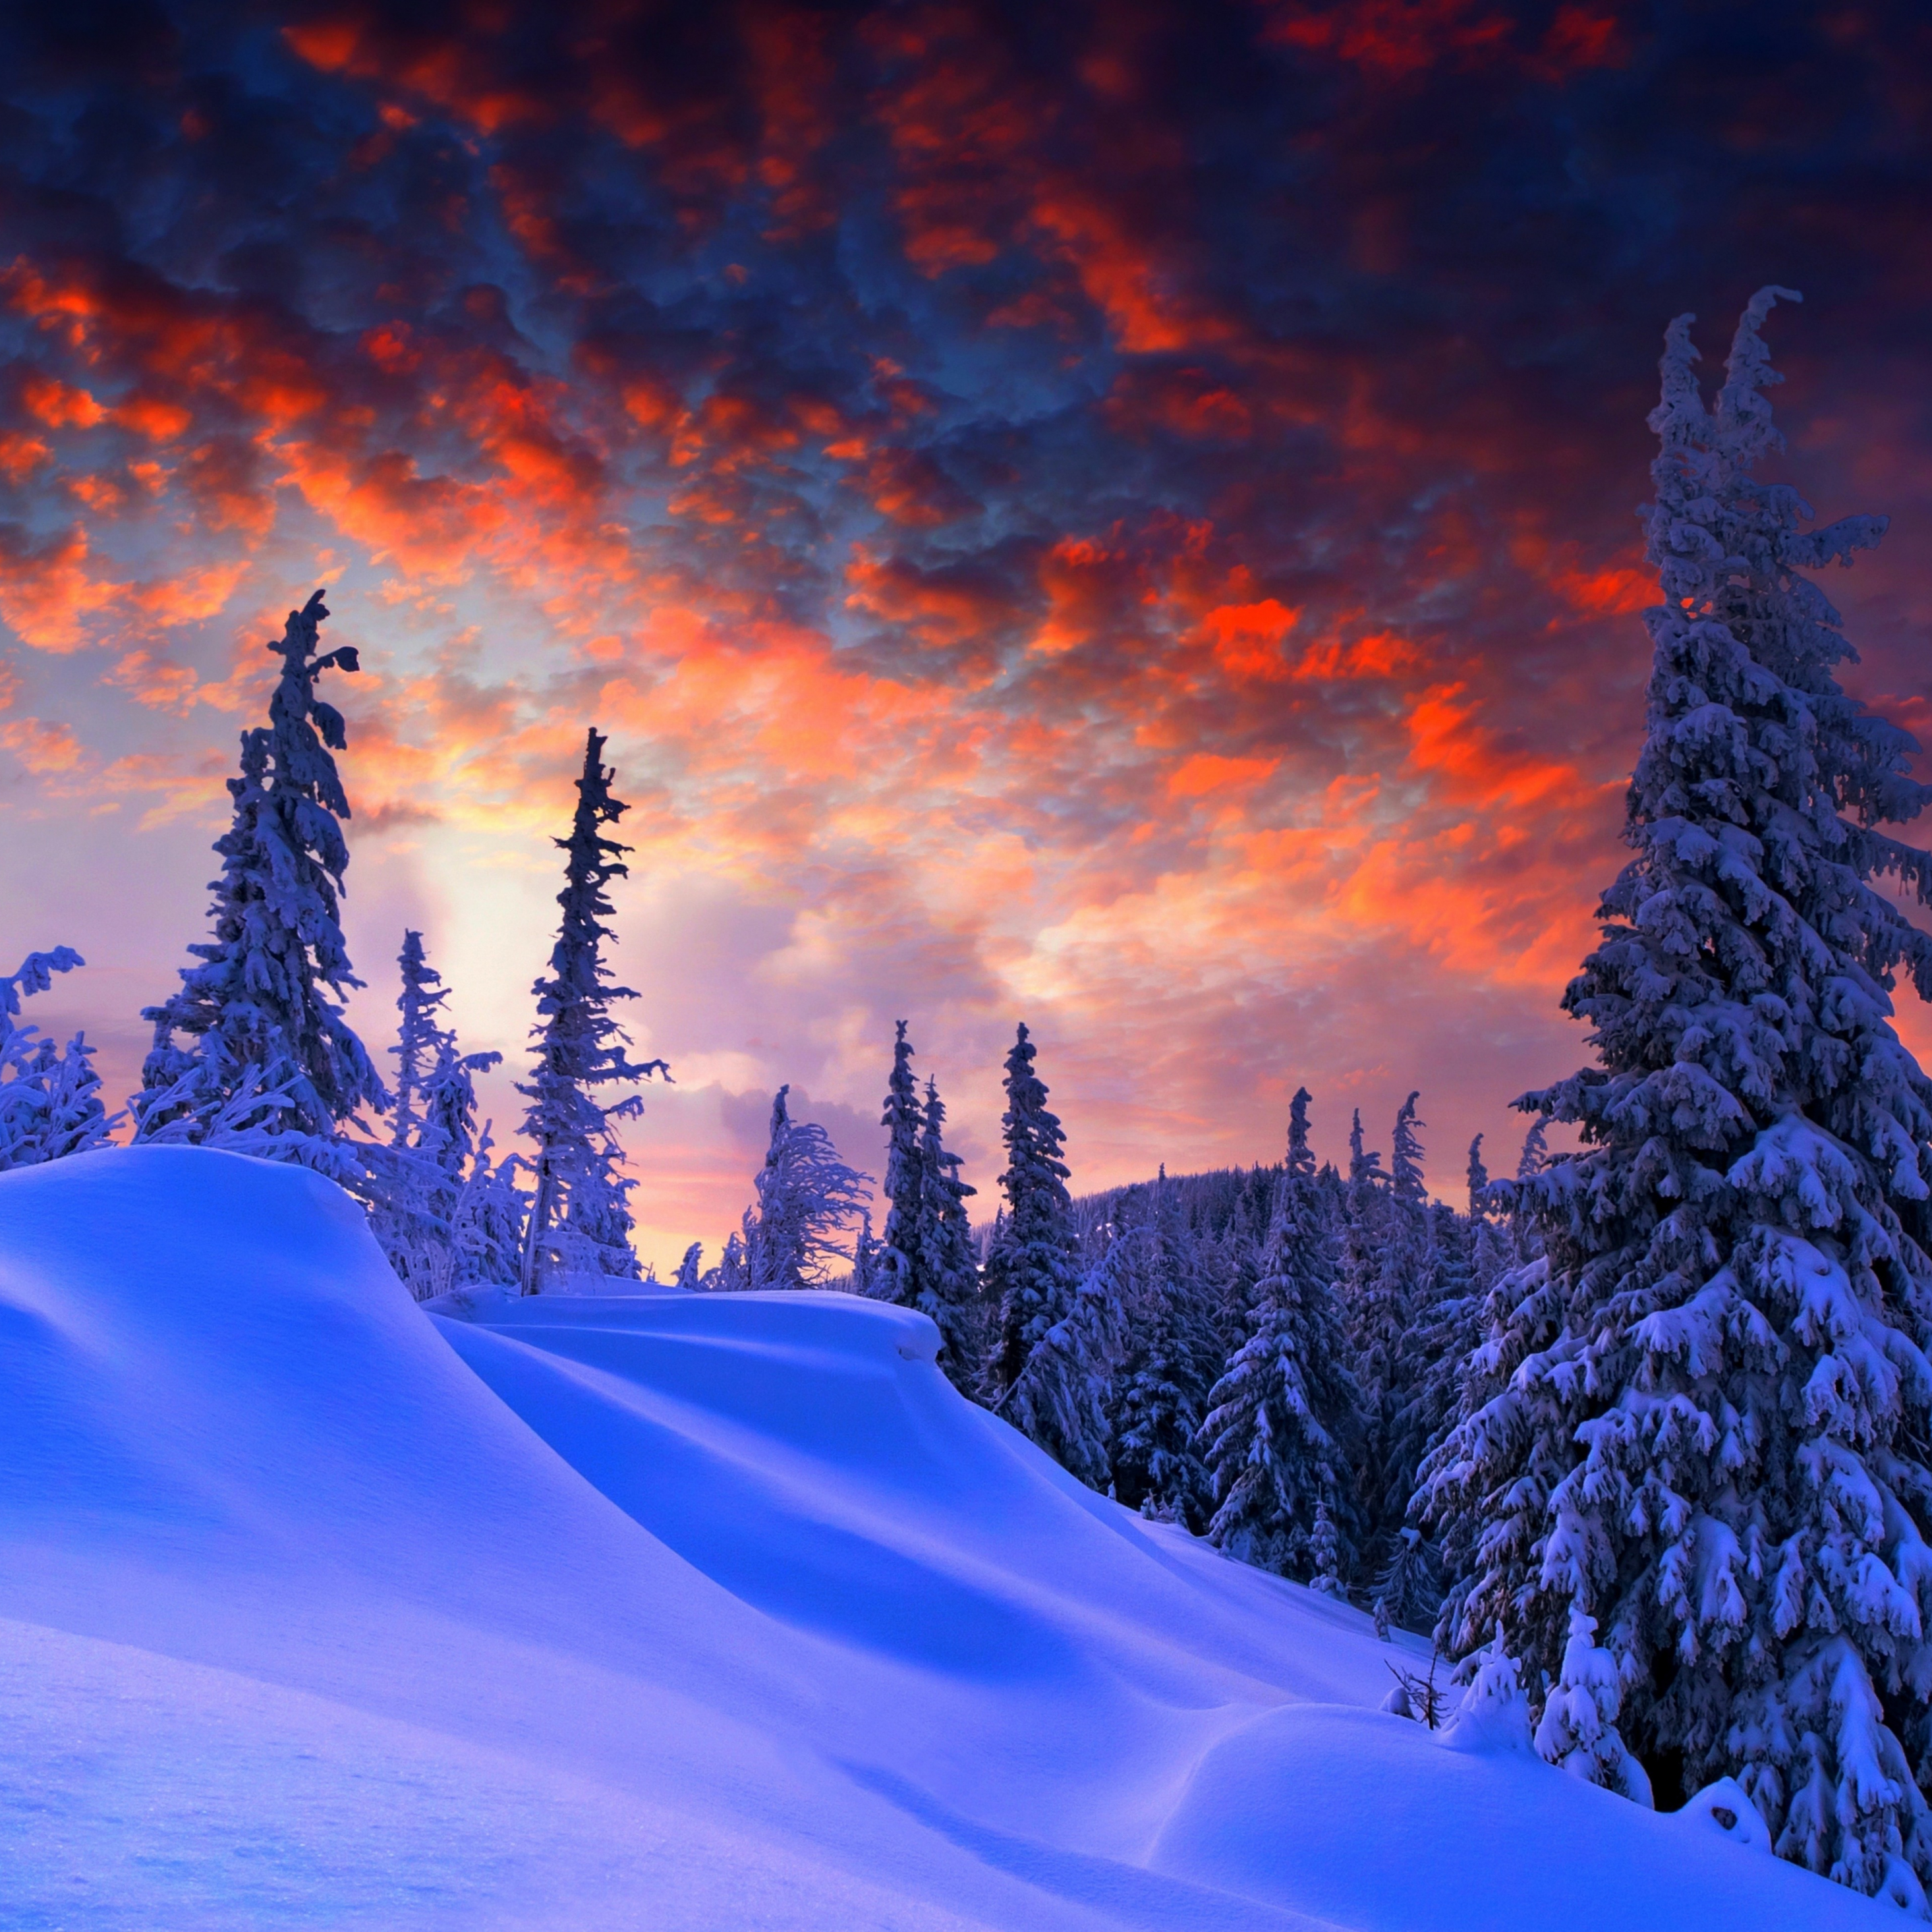 Download wallpaper 2932x2932 winter evening, beautiful sky, trees, clouds, ipad  pro retina, 2932x2932 hd background, 1199